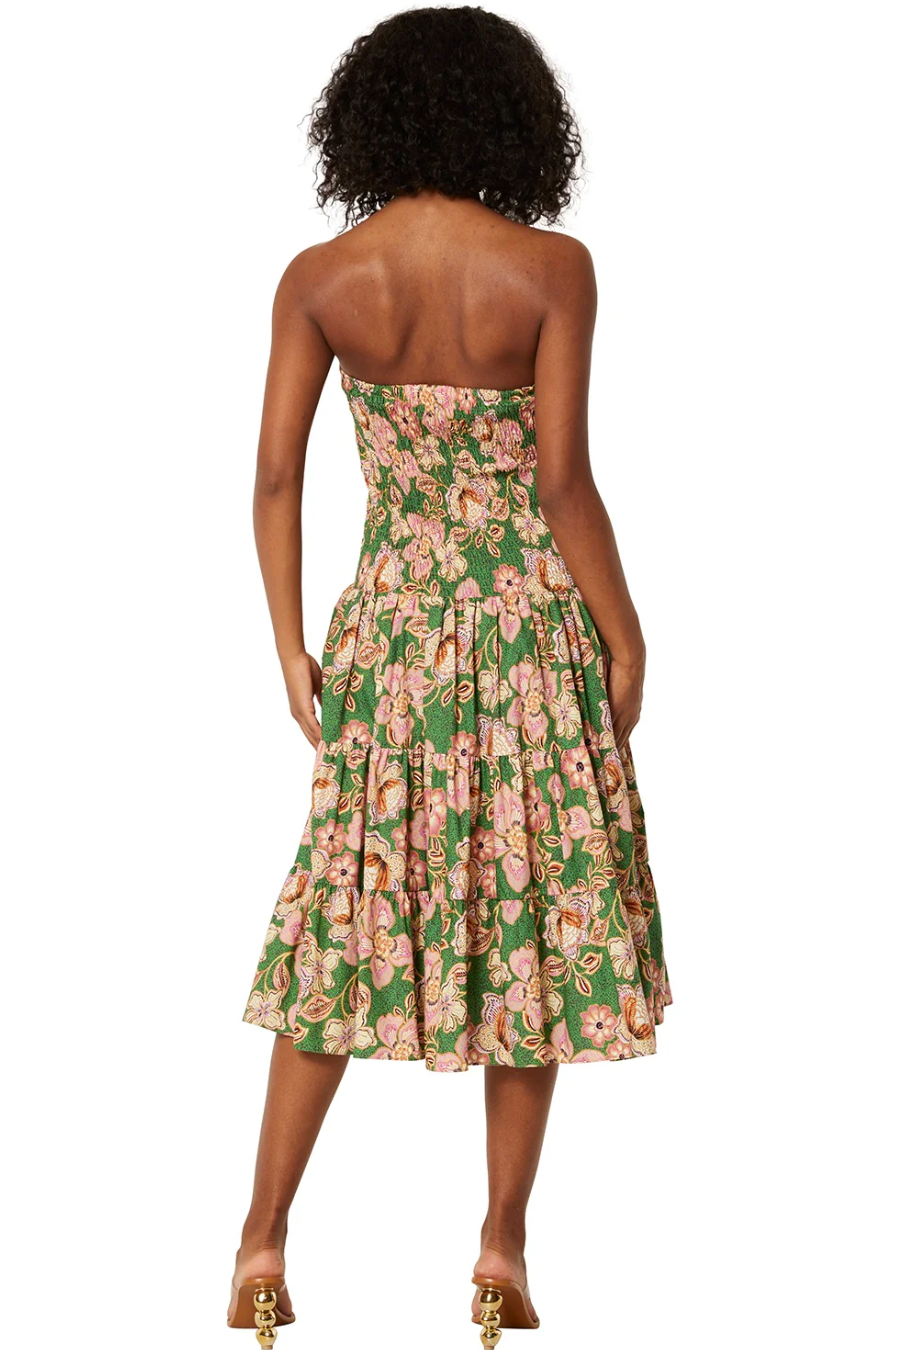 Lola Convertible Dress/Skirt - Kelly Blossoms